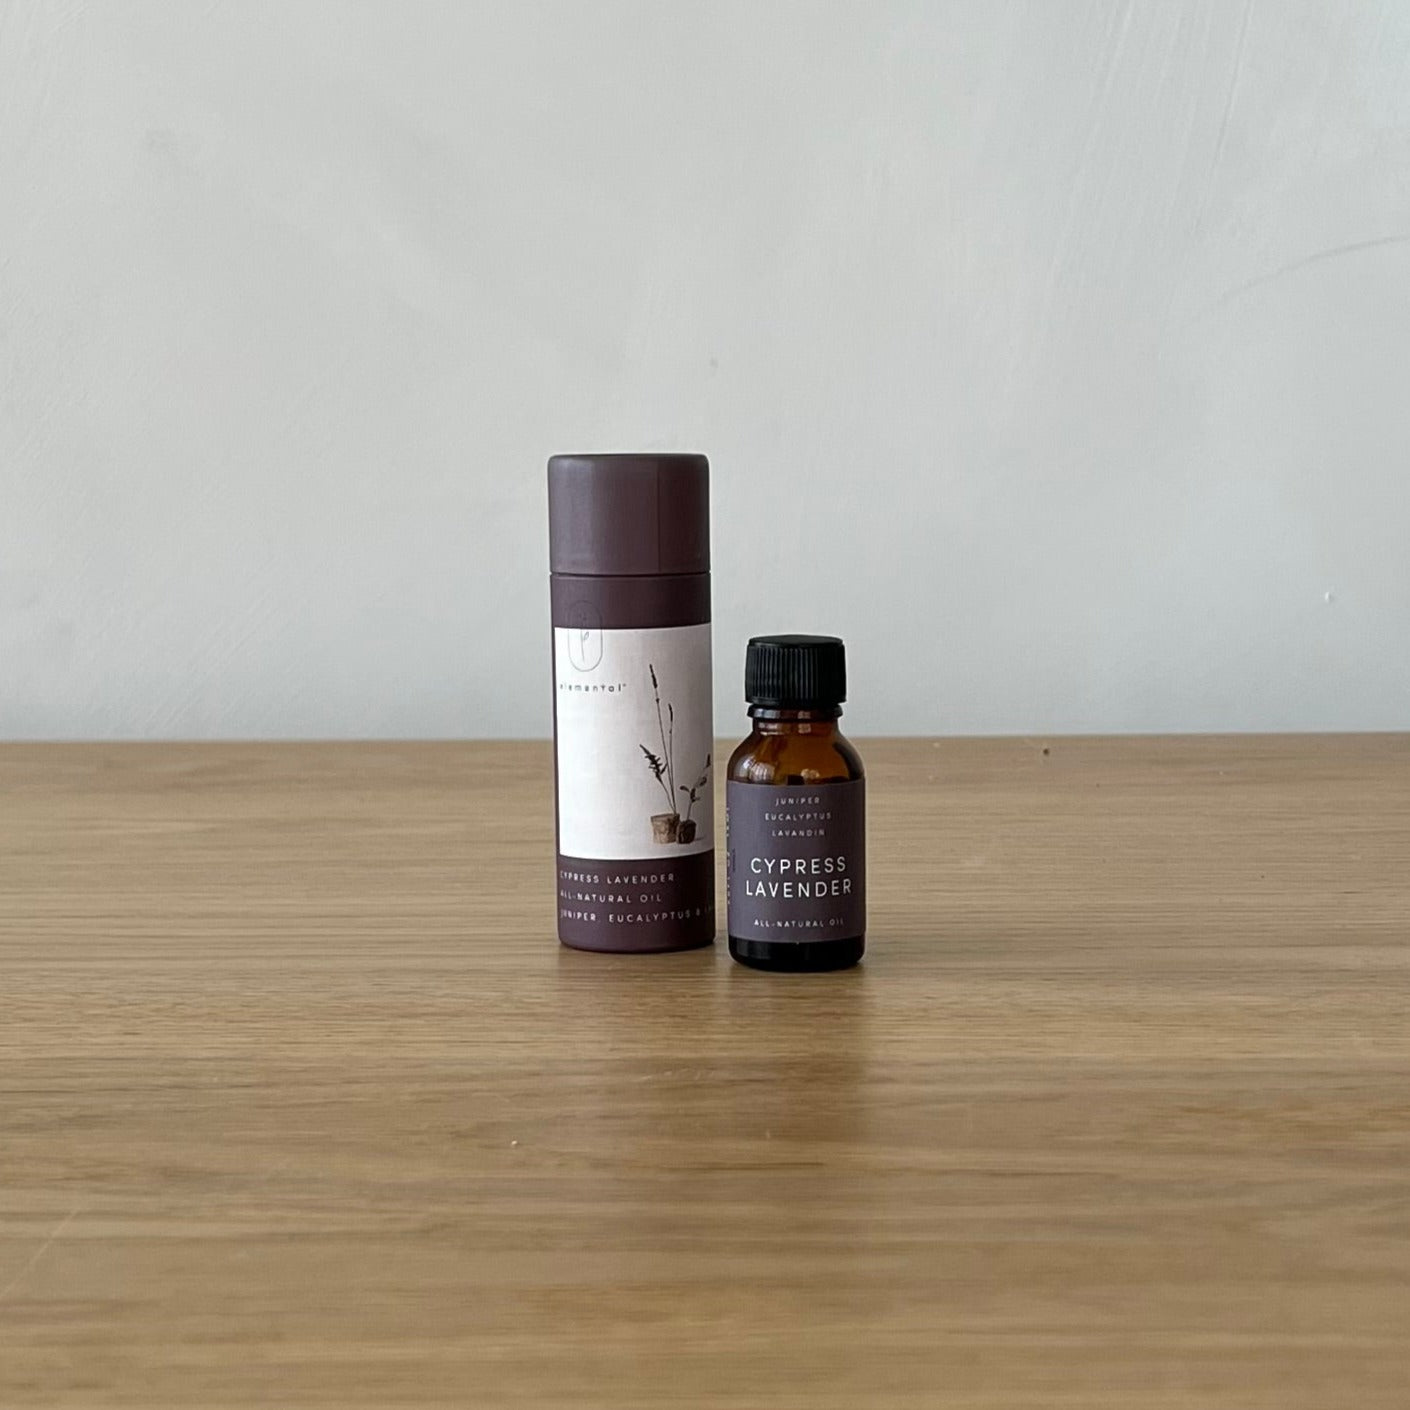 Cypress Lavender Essential Oils